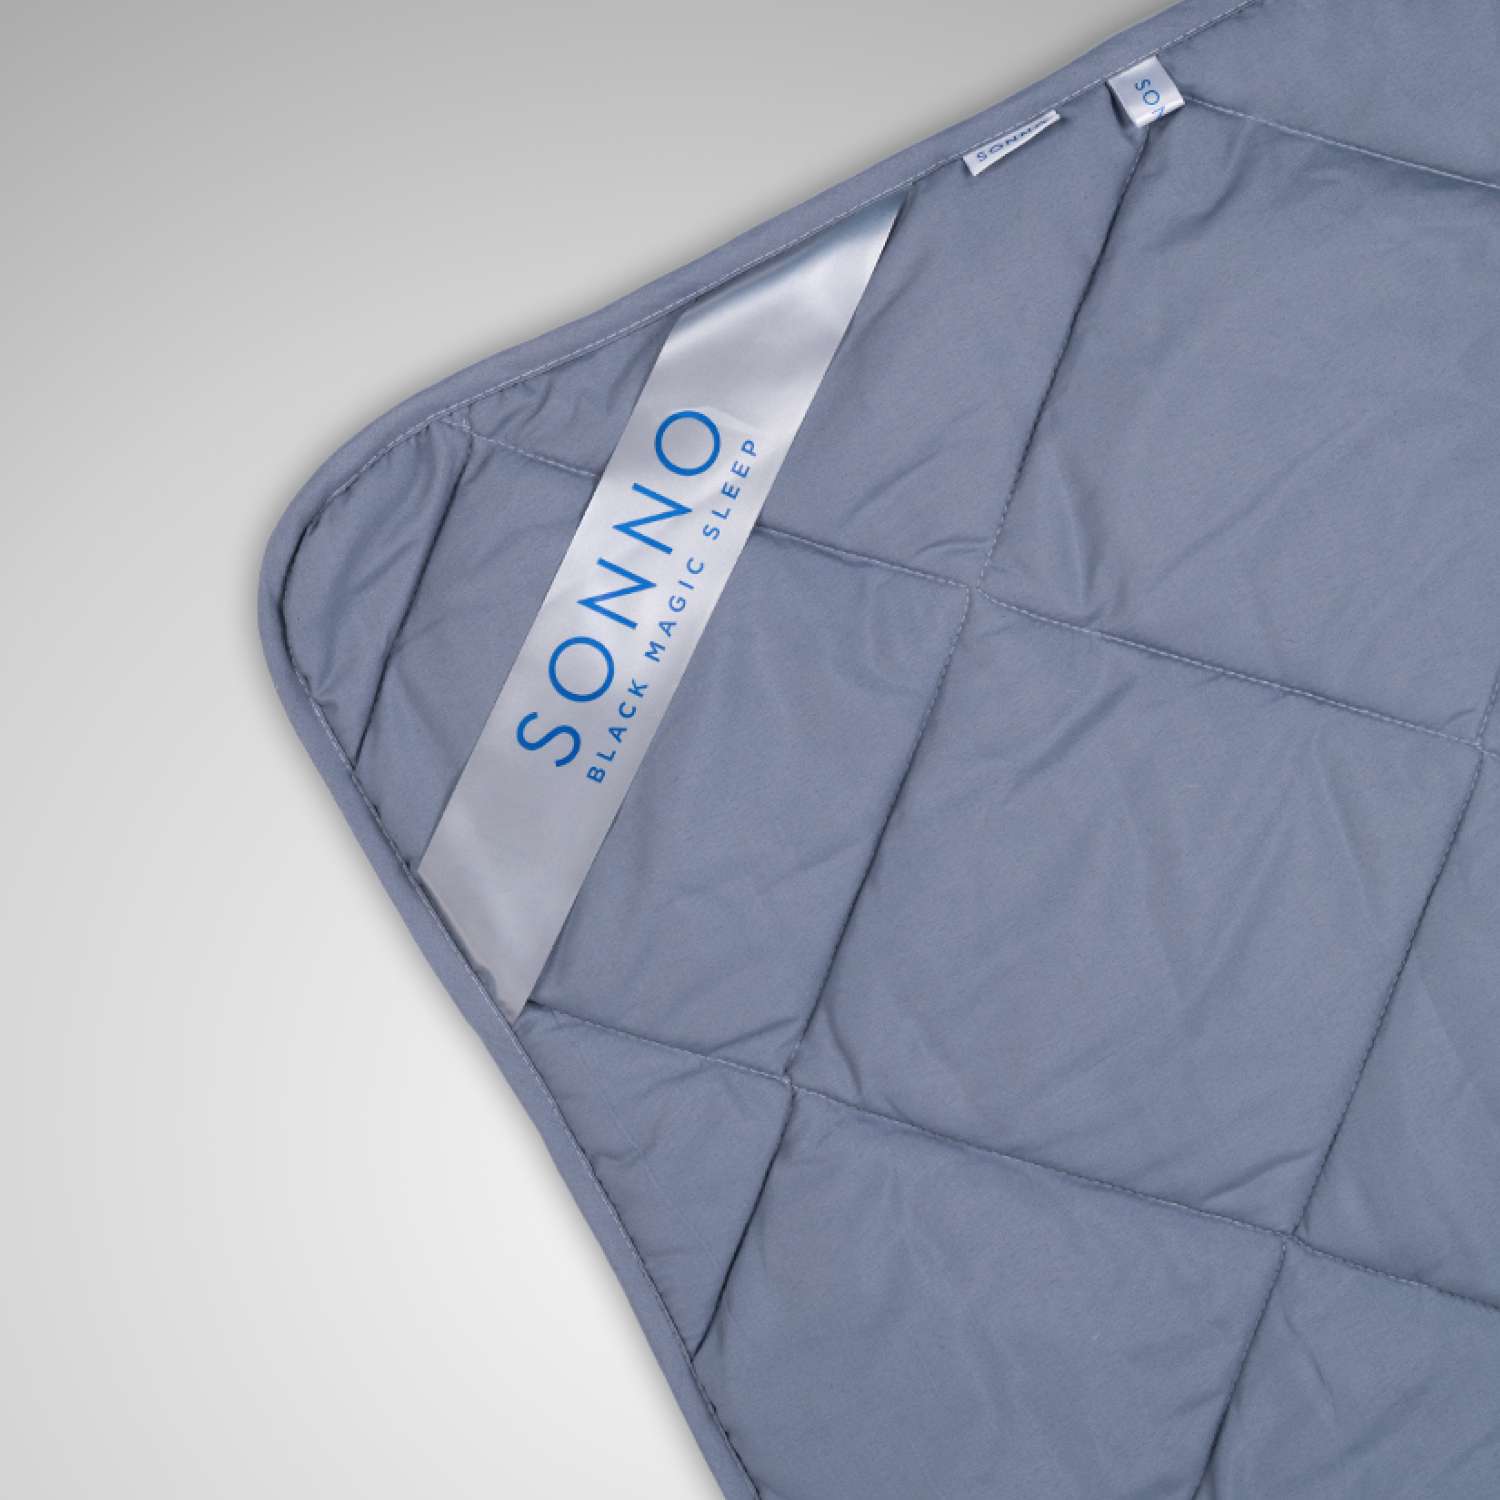 Одеяло SONNO AURA Евро-размер 200х220 Amicor TM Цвет Французский серый - фото 5